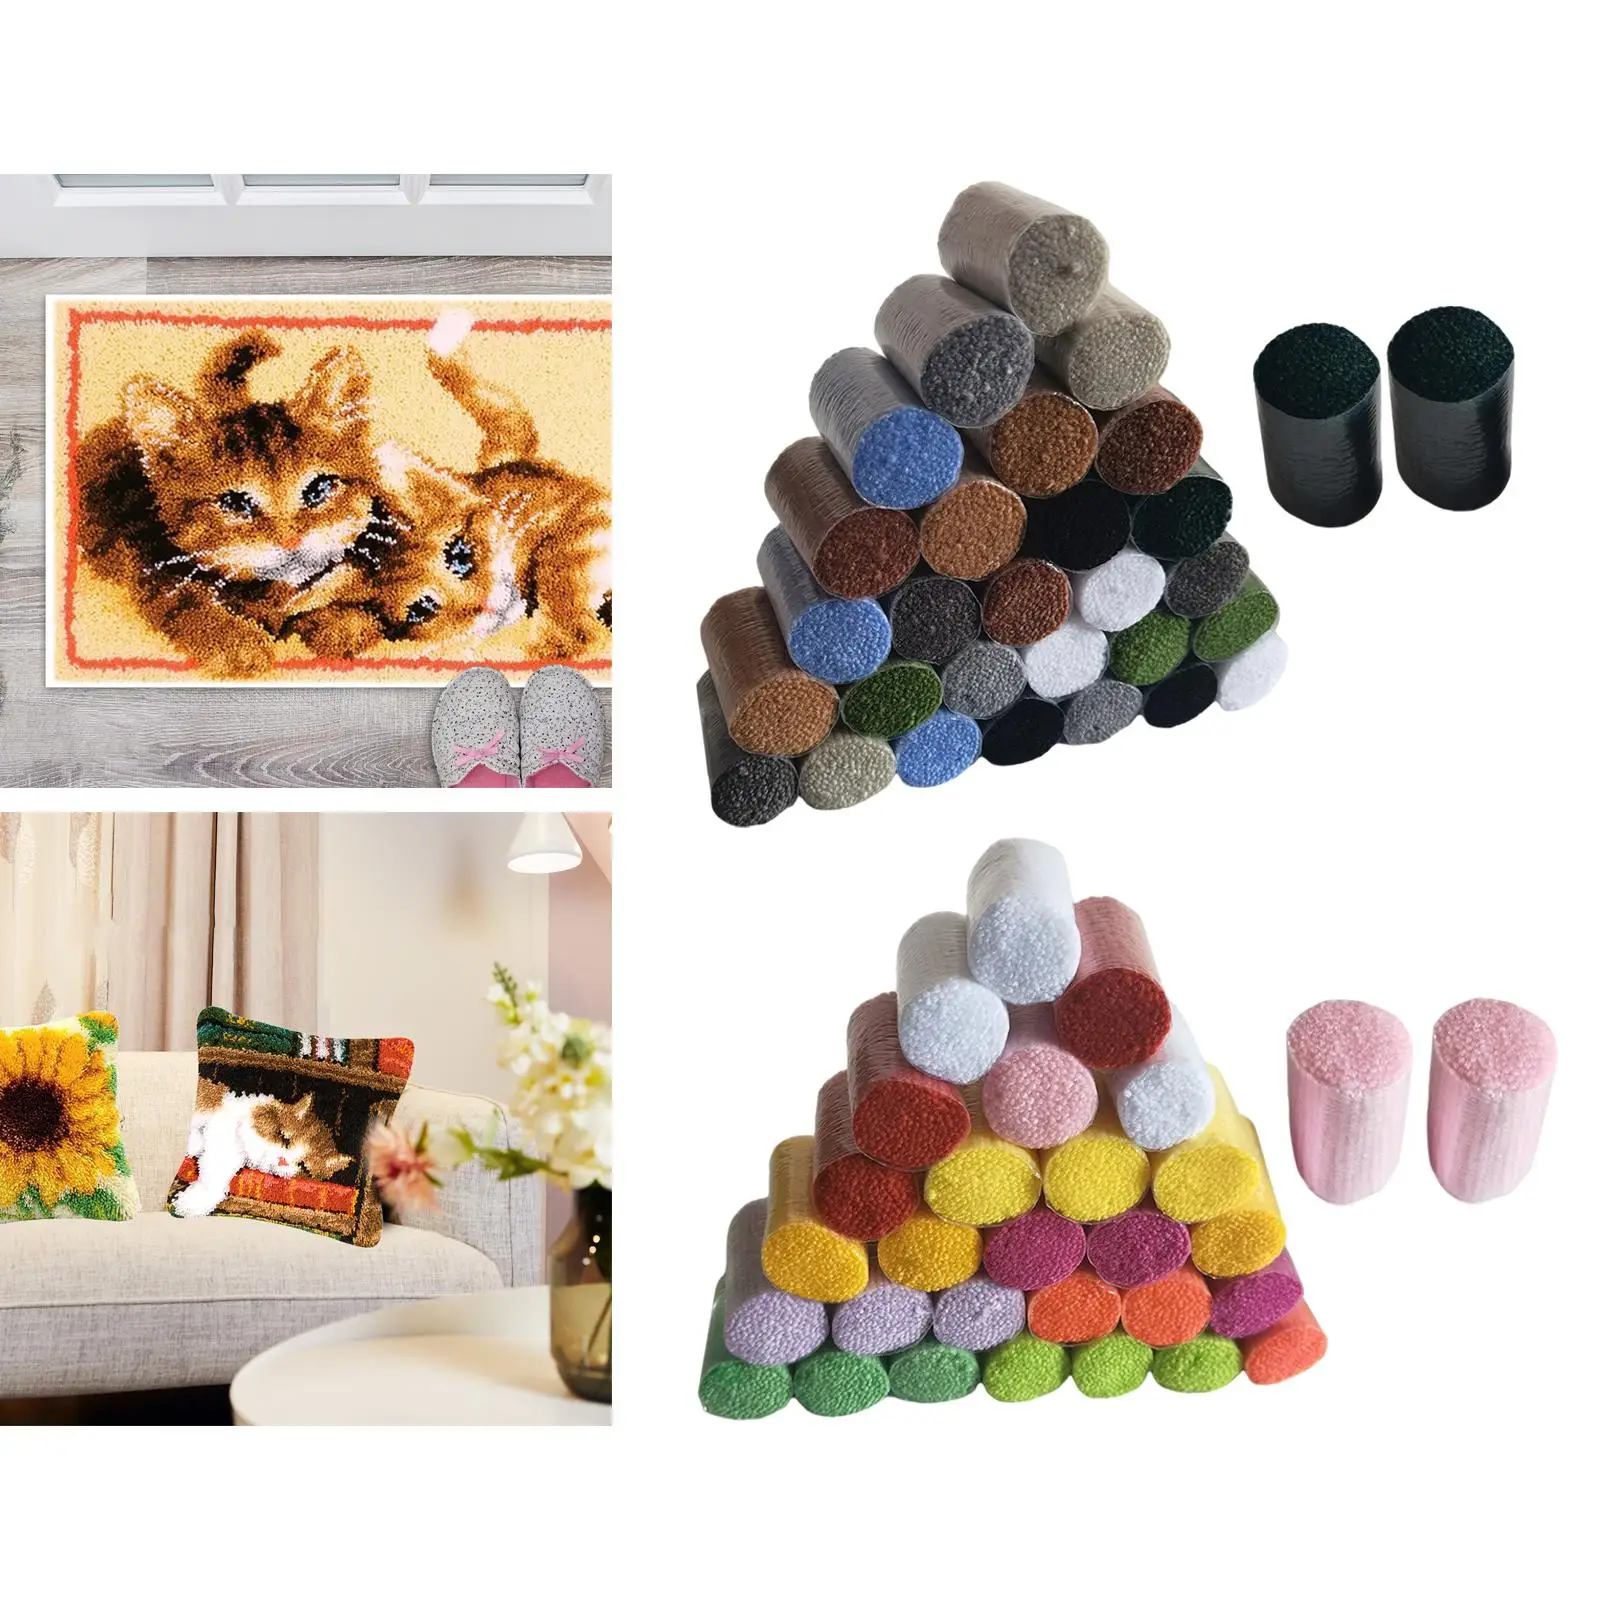 30pcs DIY Latch Hook Cushion Kits Crochet Craft Acrylic Yarn for Embroidery Sofa Bed Cushion Cover Home Decoration